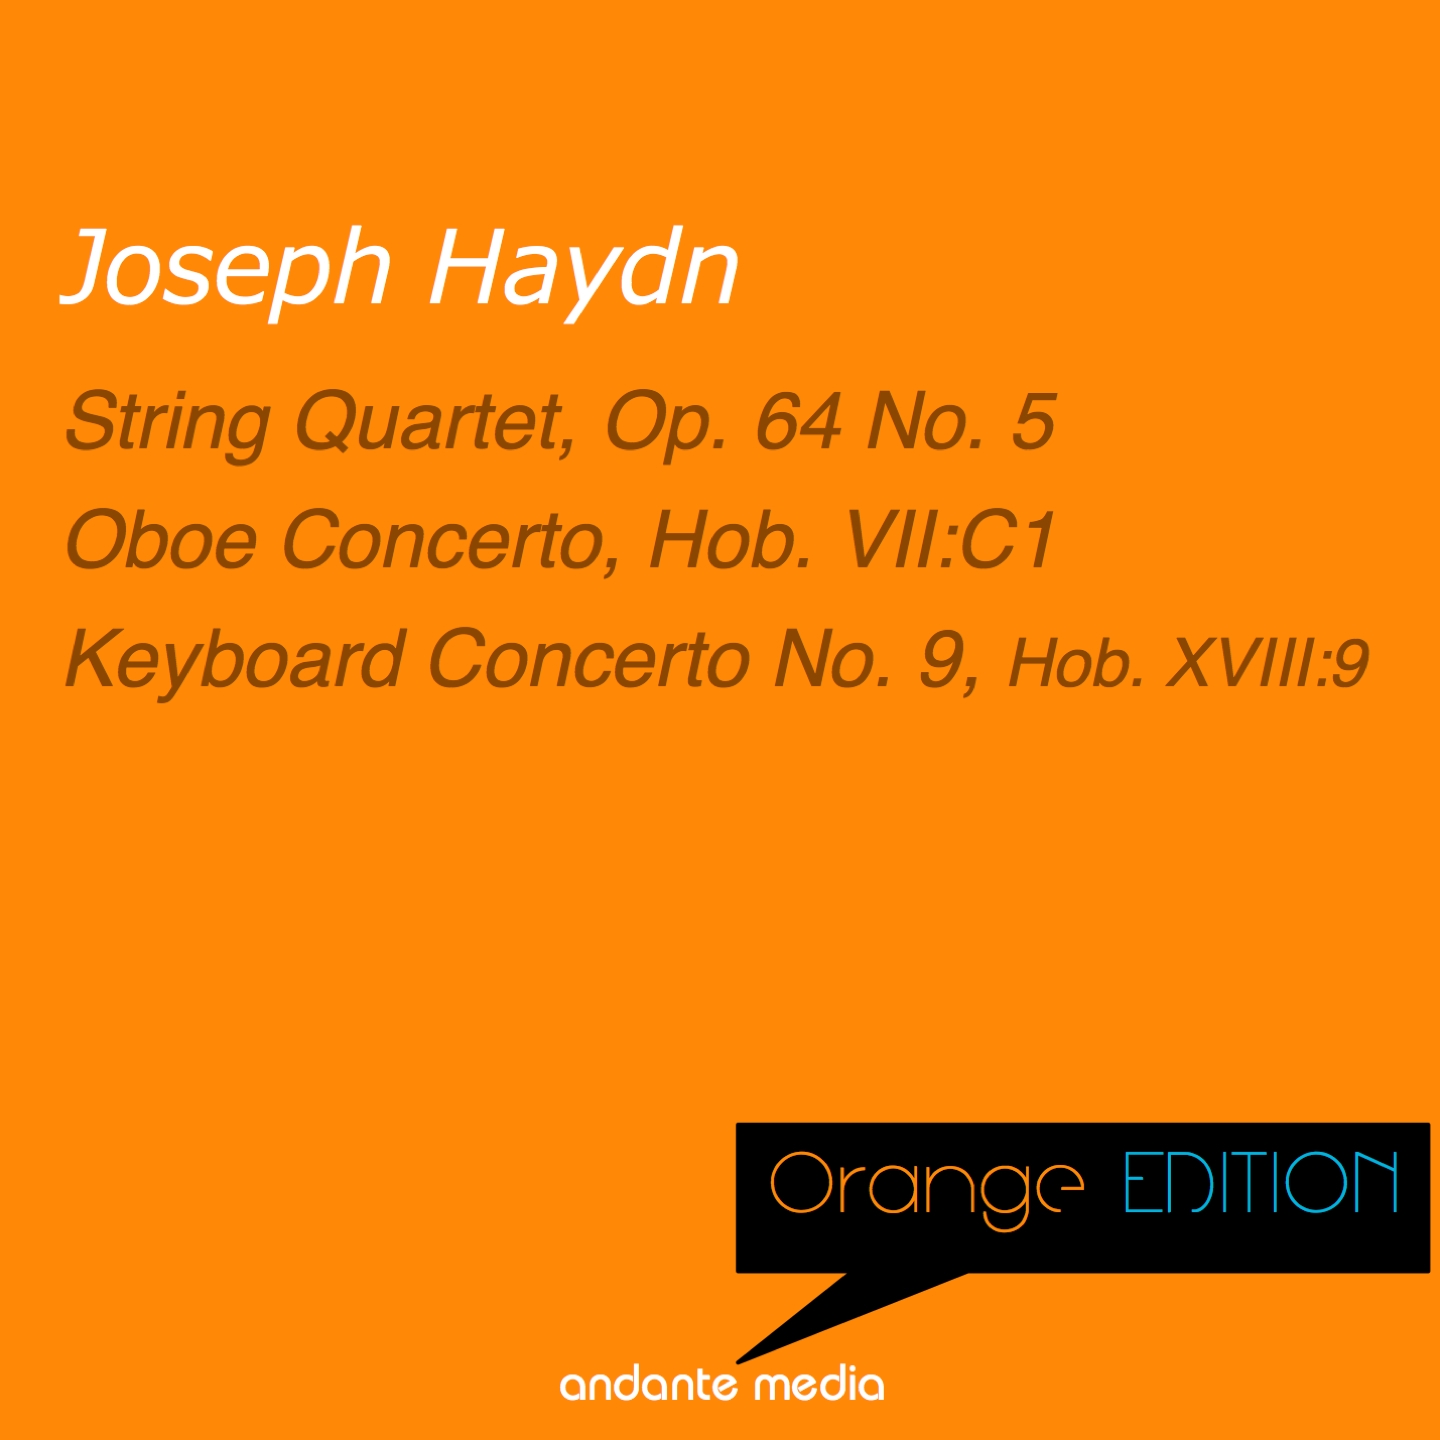 Orange Edition - Haydn: String Quartet, Op. 64 No. 5 & Keyboard Concerto No. 9, Hob. XVIII:9